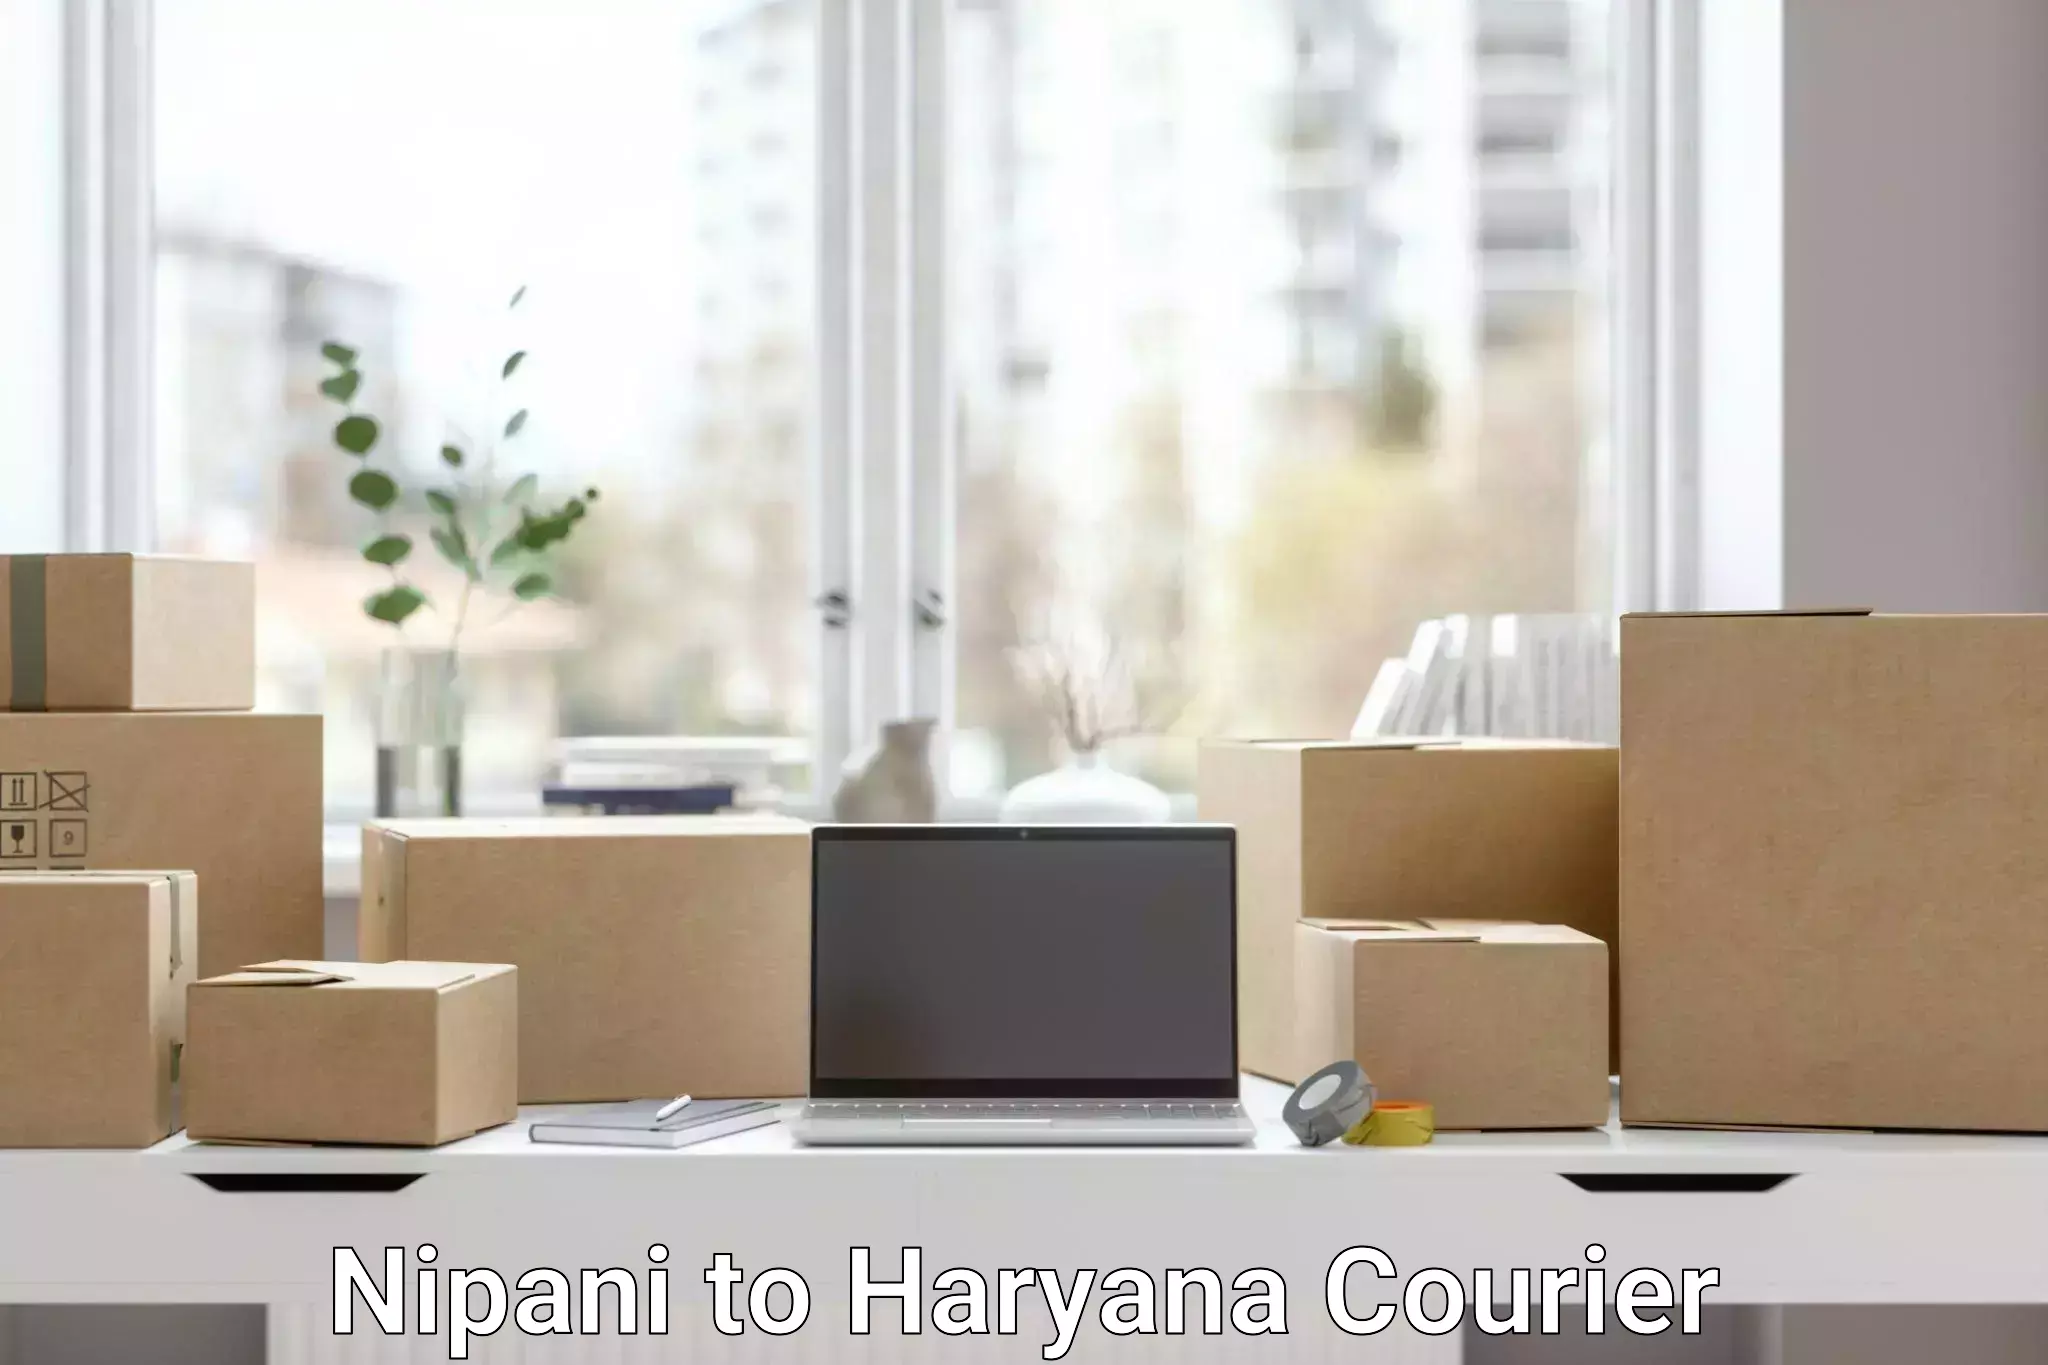 Professional courier handling Nipani to Haryana